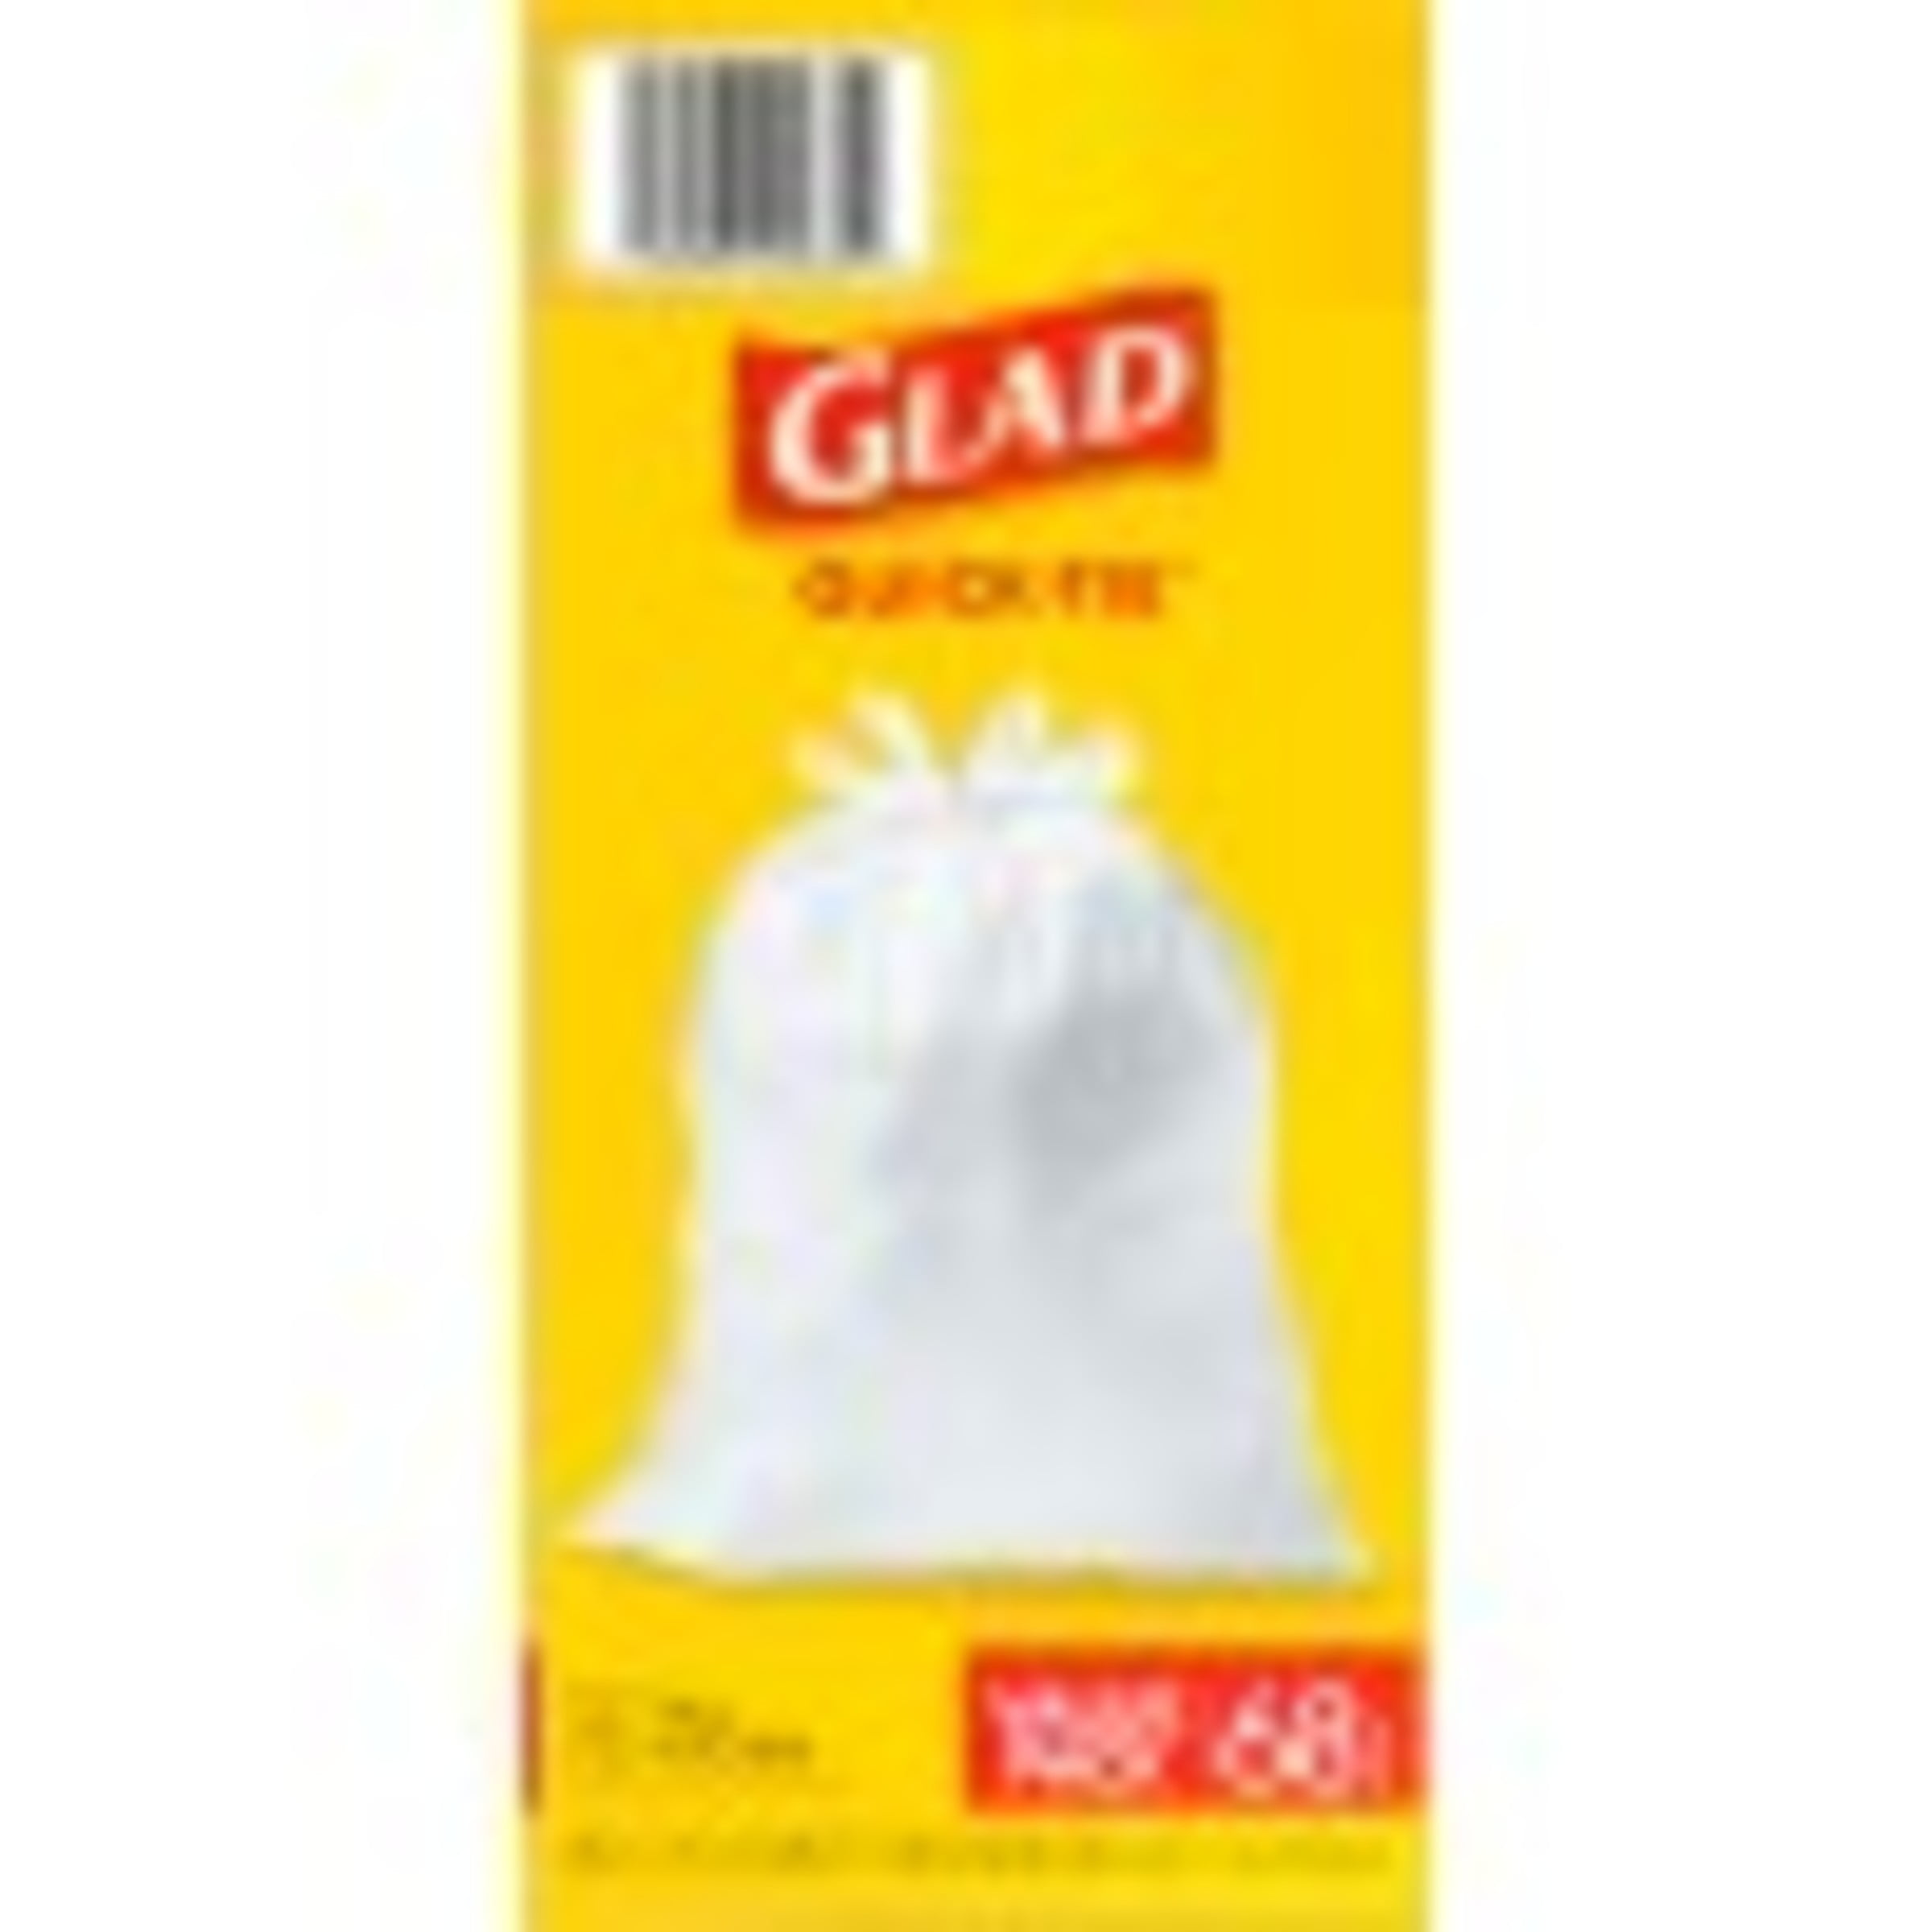 Glad® Tall Kitchen Quick Tie® Trash Bags 13 Gallon White Trash Bag